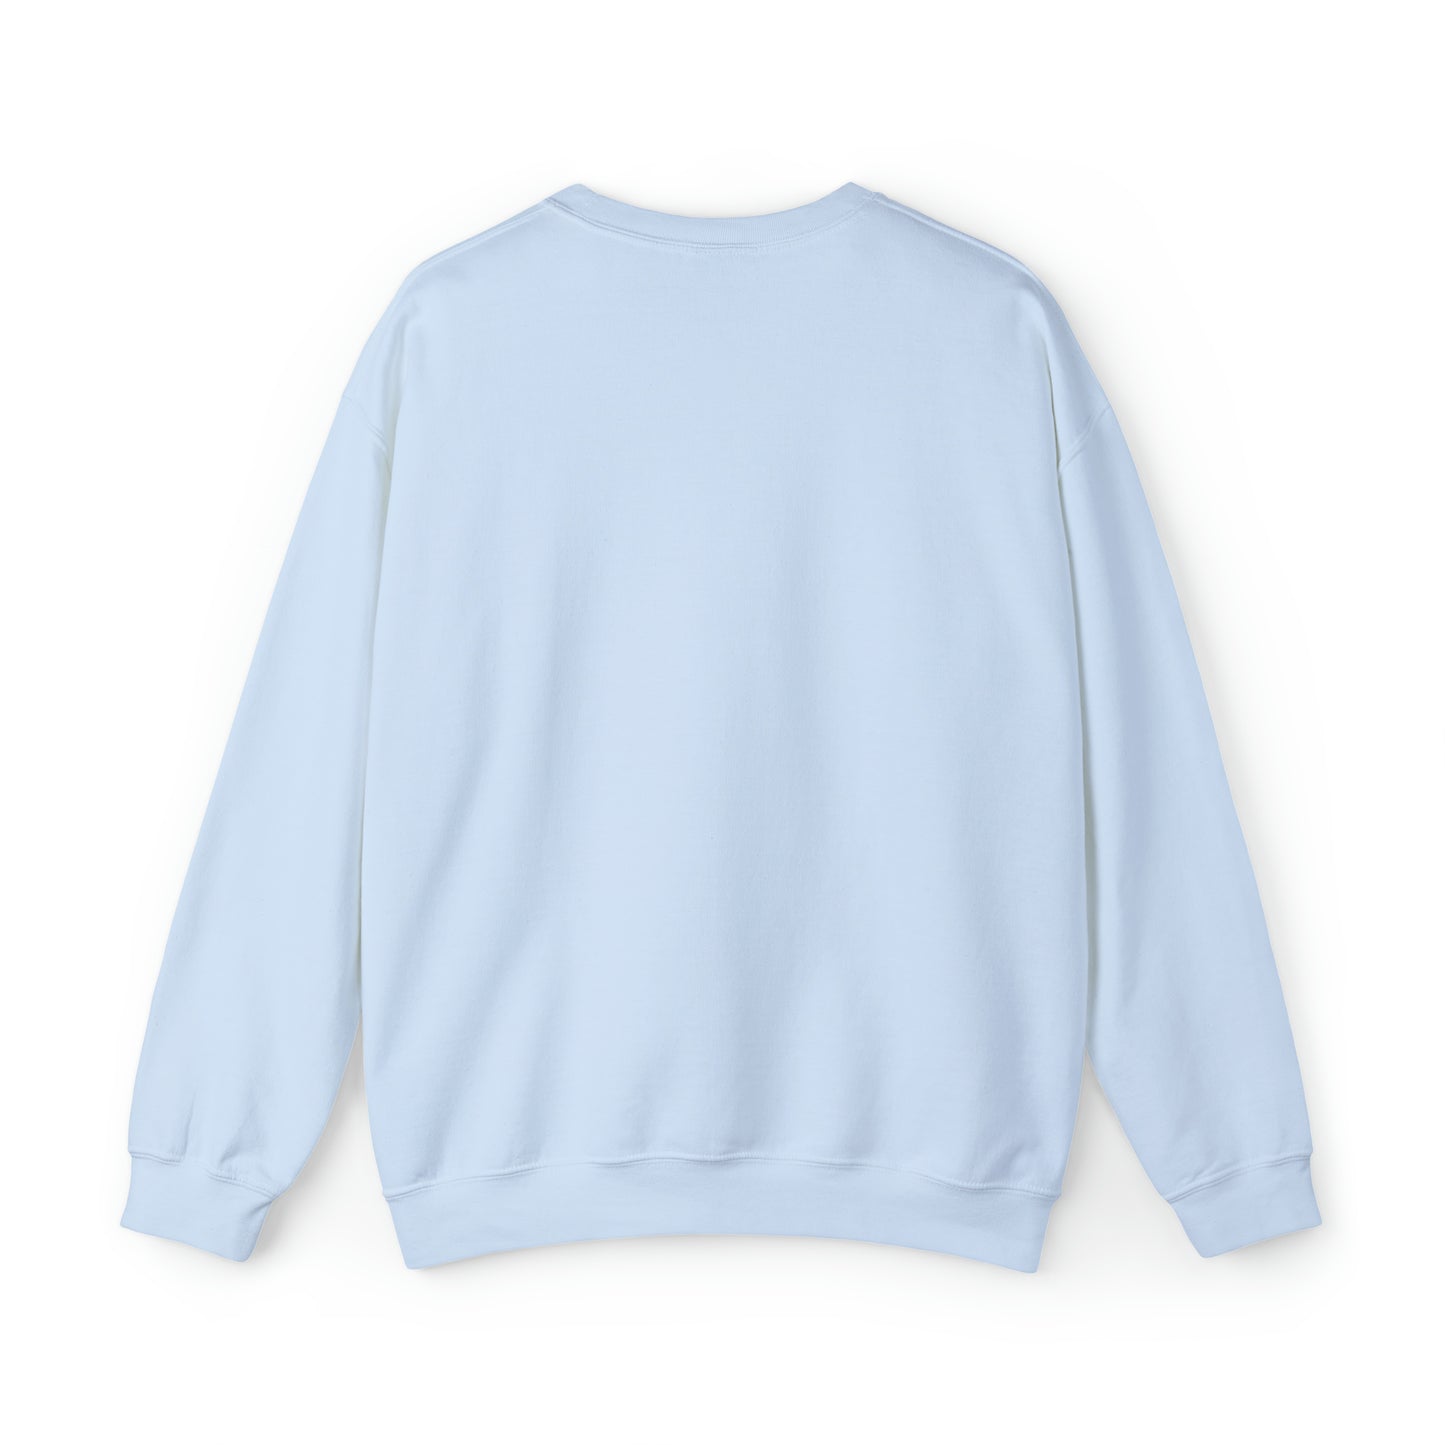 Inspire Wear Baseball Unisex Heavy Blend™ Crewneck Sweatshirt